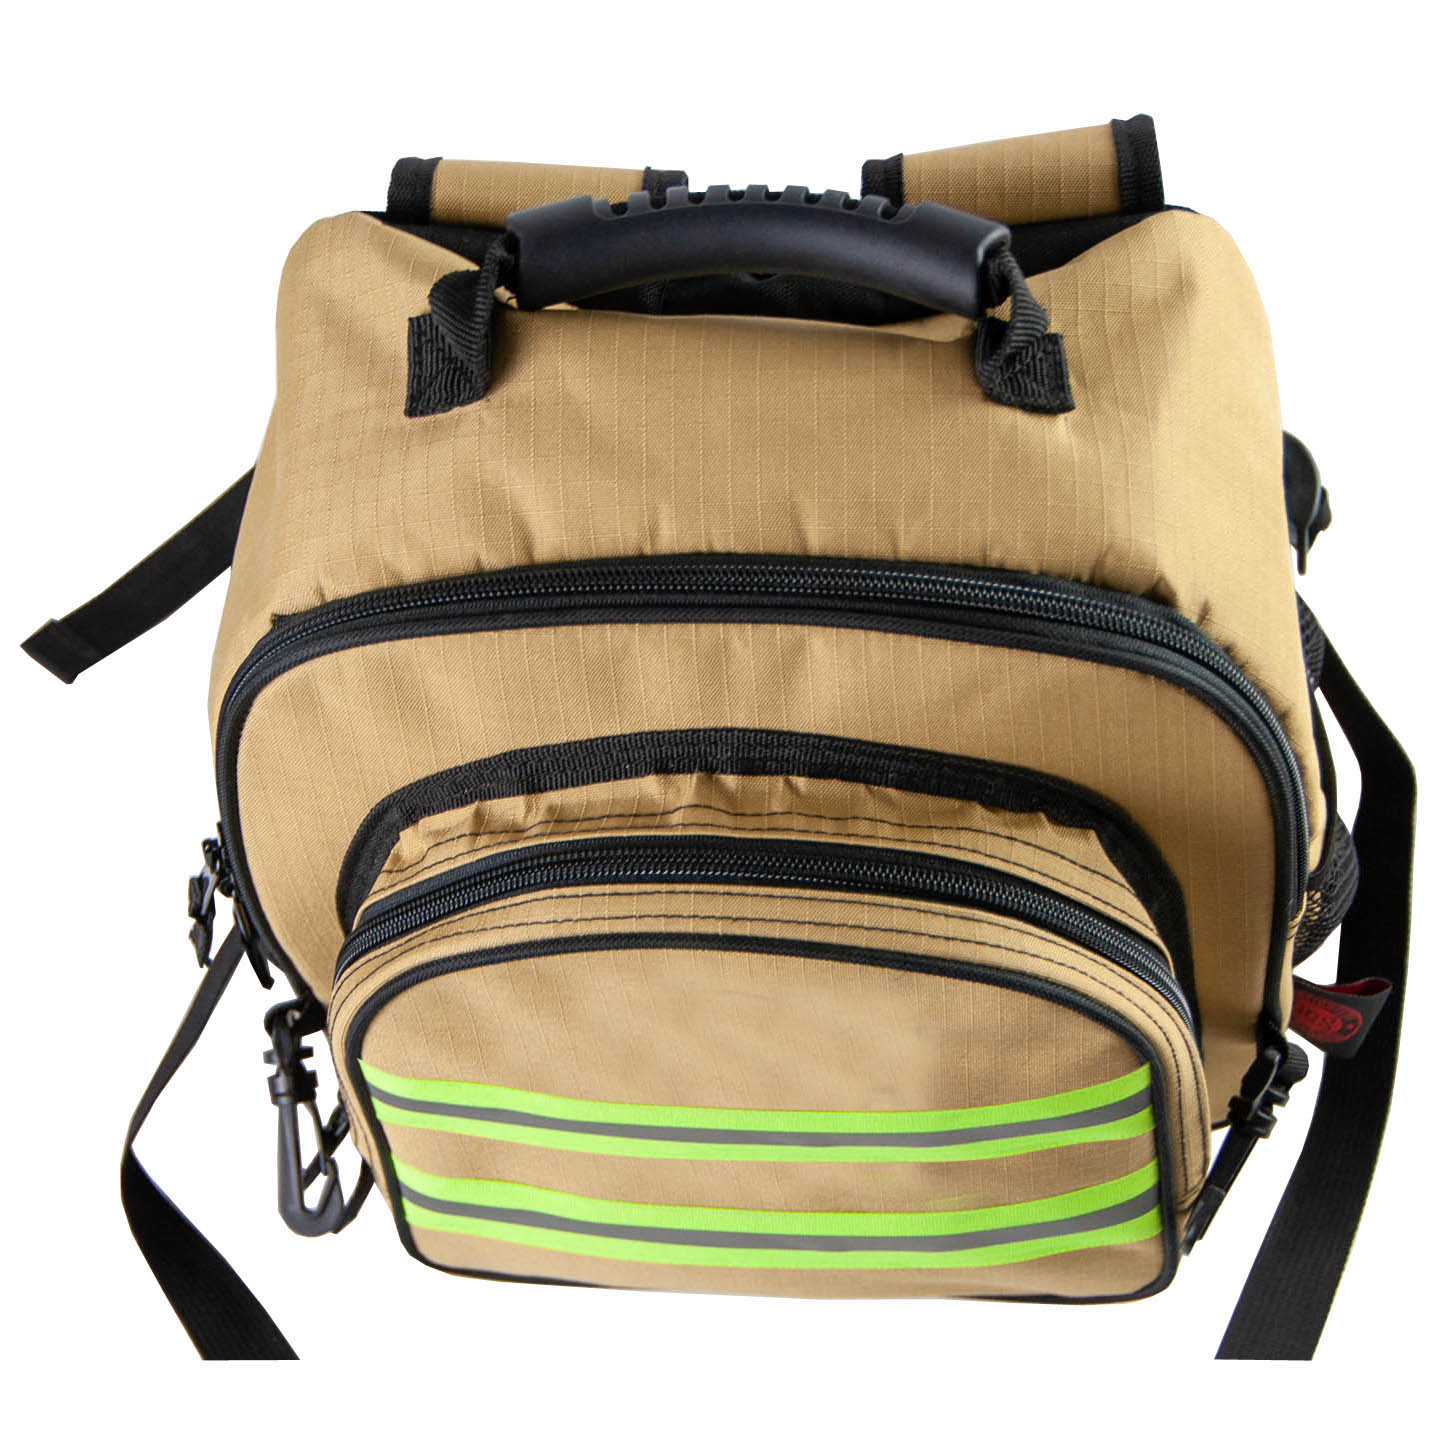 Customized Firefighter Backpack Bag For Kids